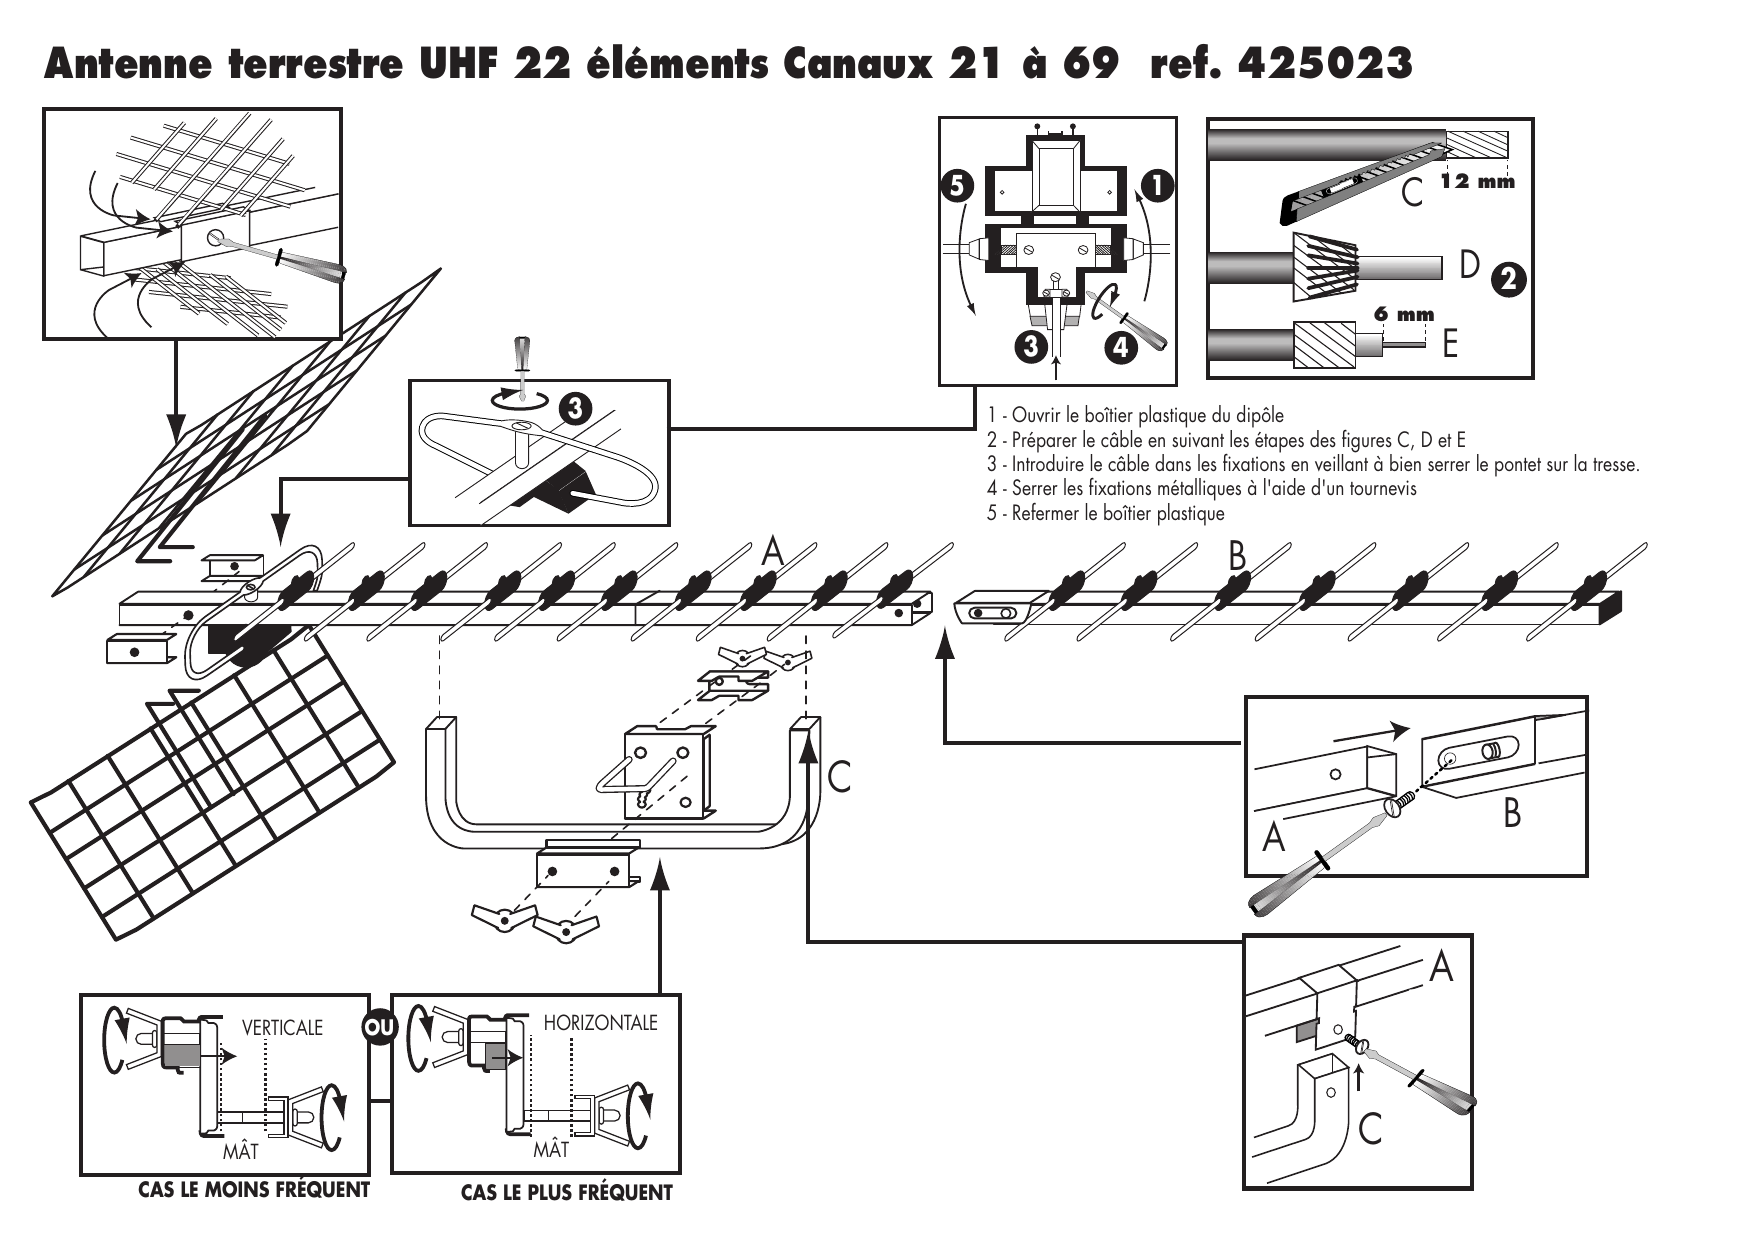 VHF UHF a passage de courant continu Metronic 432123 Coupleurs 3 entrees UHF